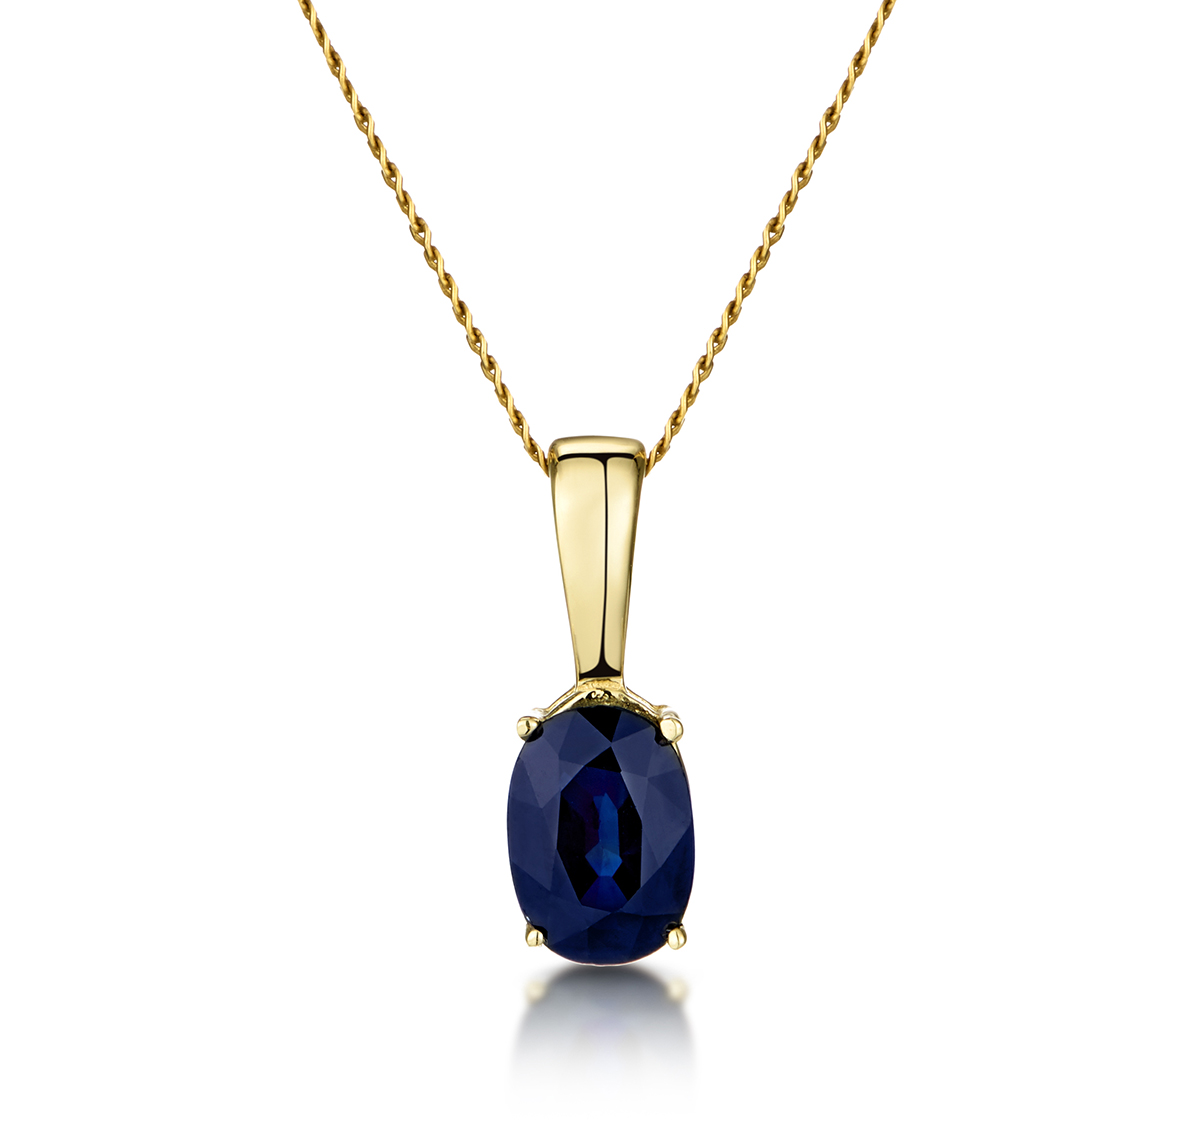 Sarotta Jewelry Fashion Cross Cut Blue Sapphire Yellow Gold Gp Pendant Necklace 